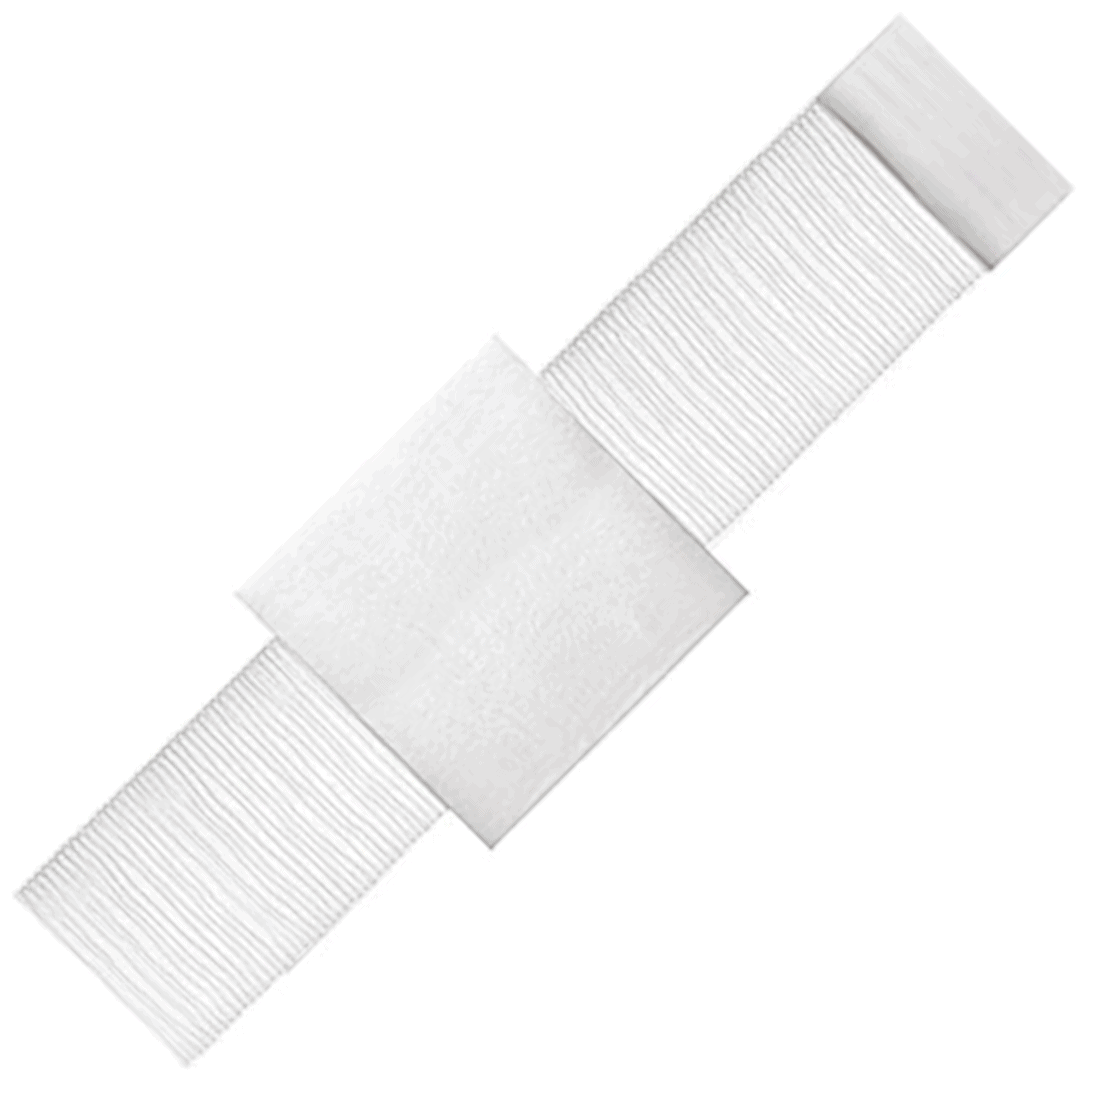 Compresses/pressure dressings with ties, sterile, 15.2 cm x 15.2 cm (6 in. x 6 in.)